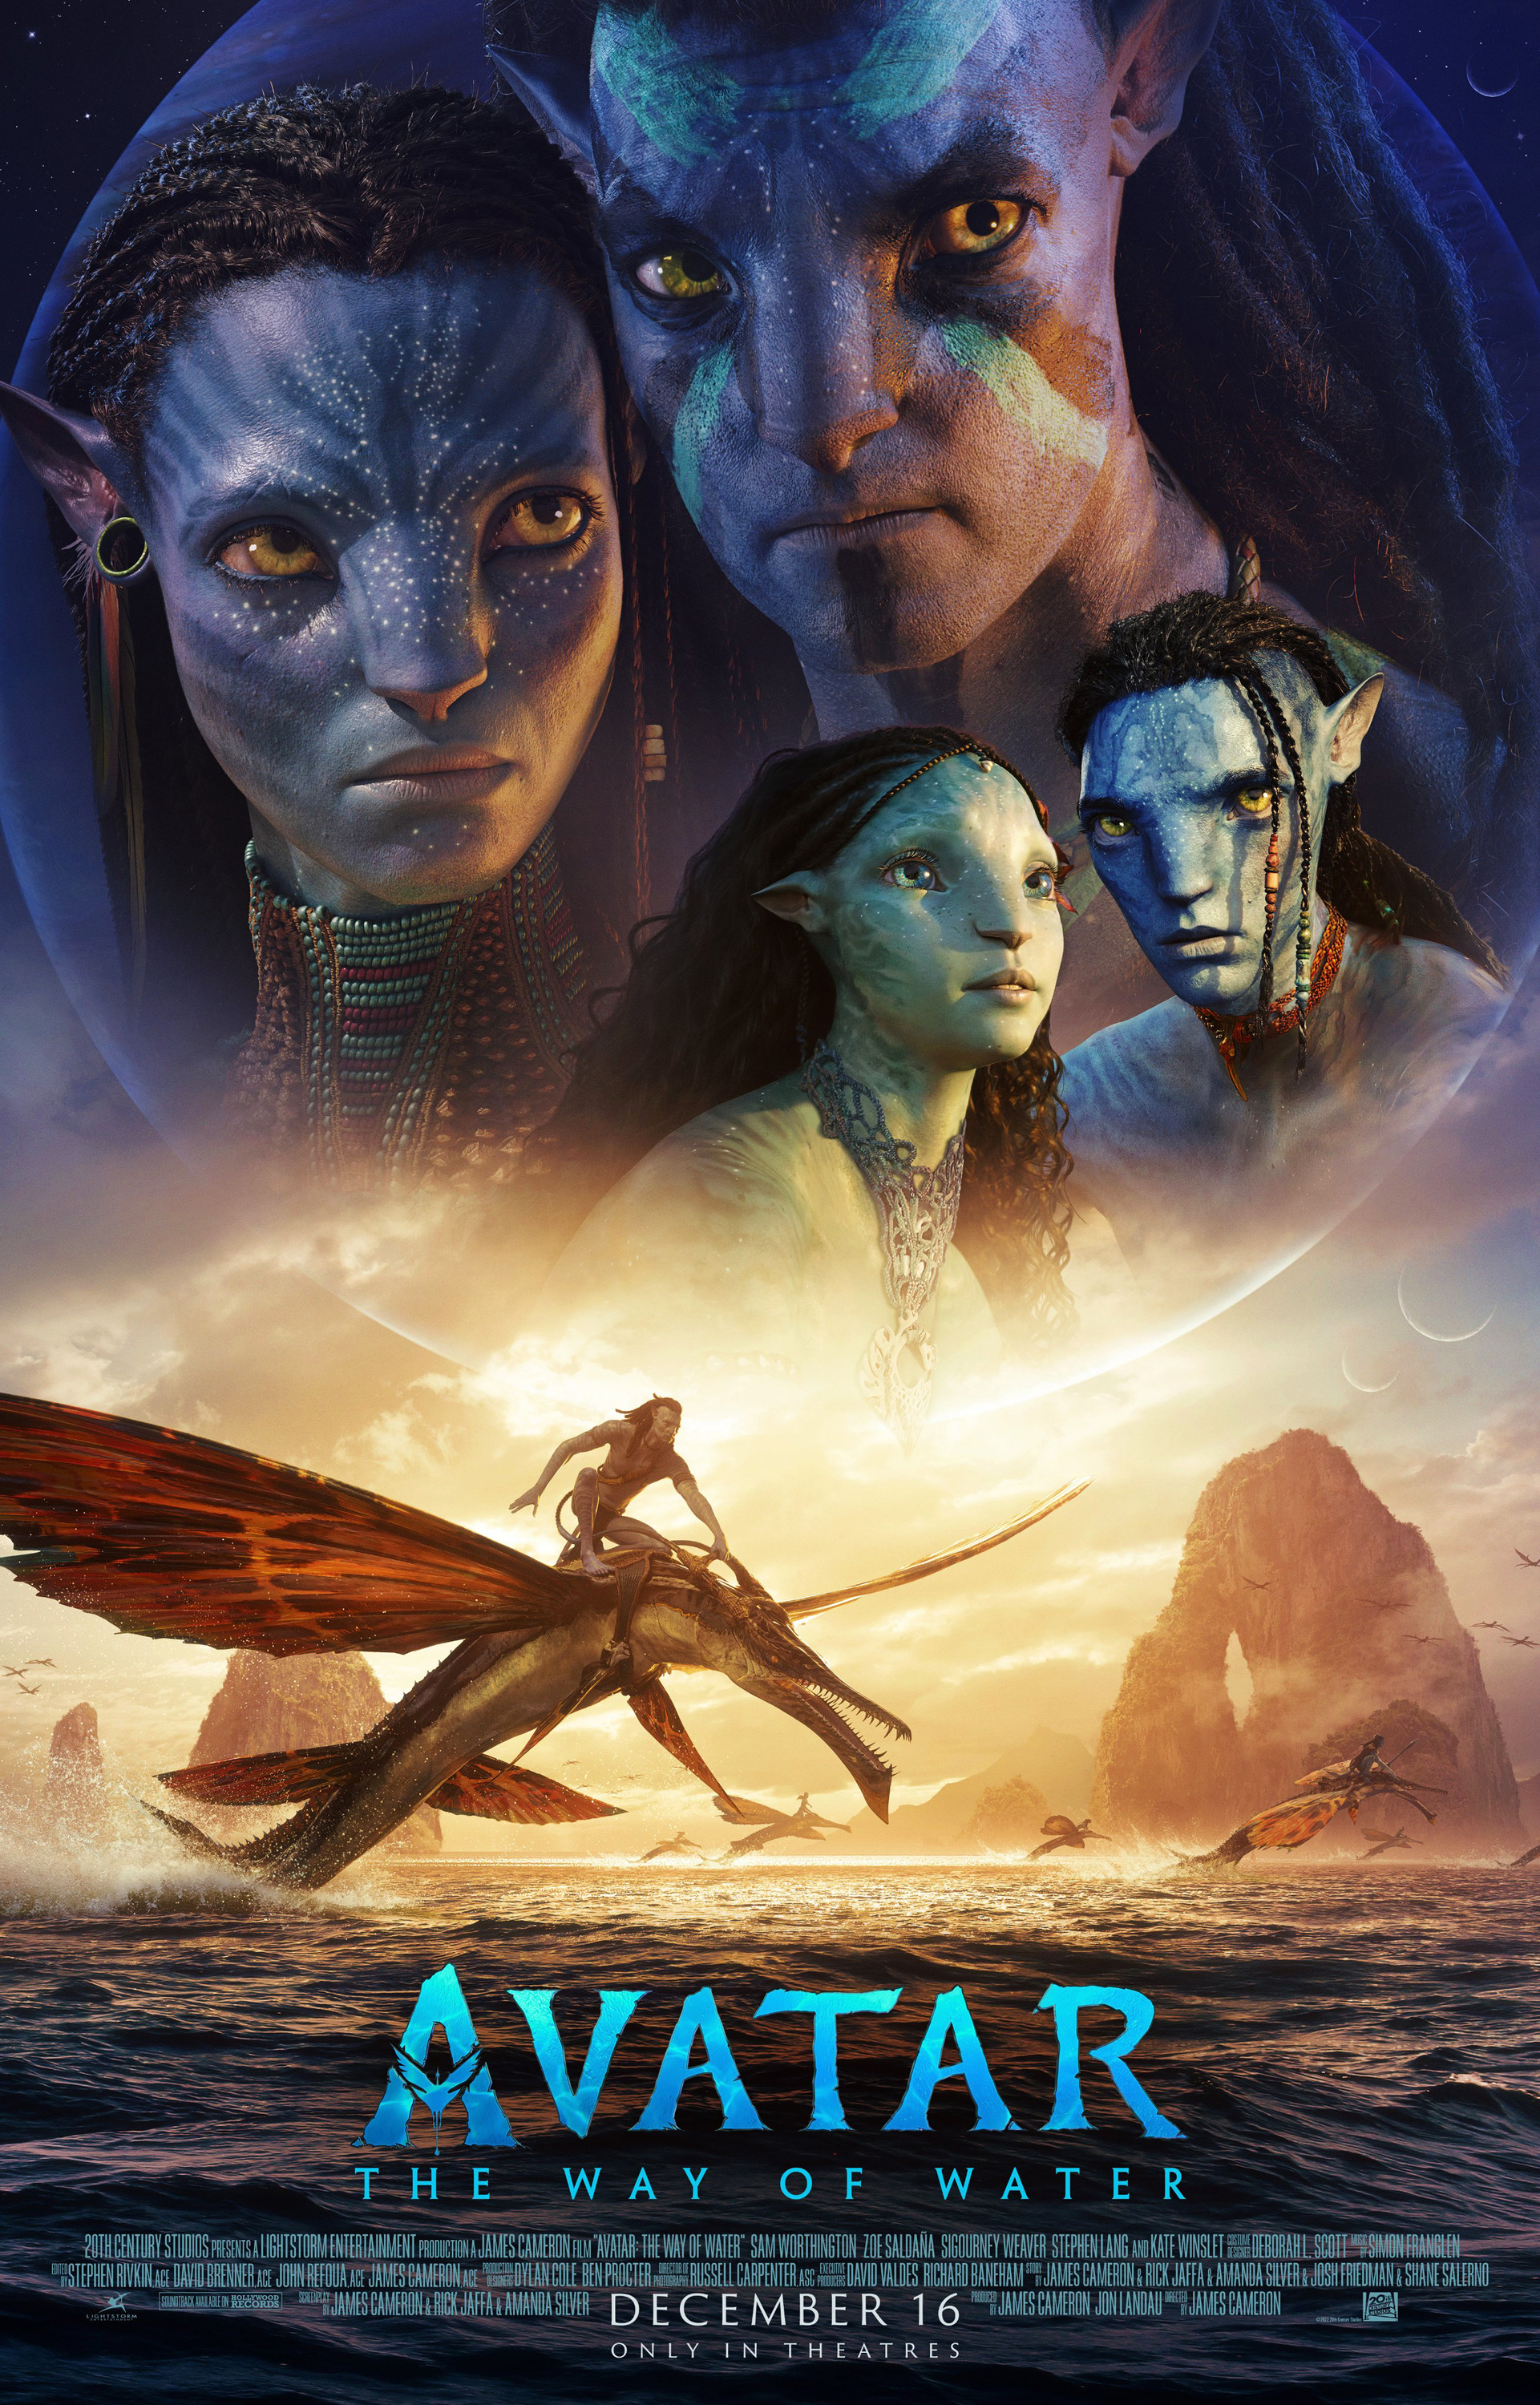 The King's Avatar (2019 TV series) - Wikipedia